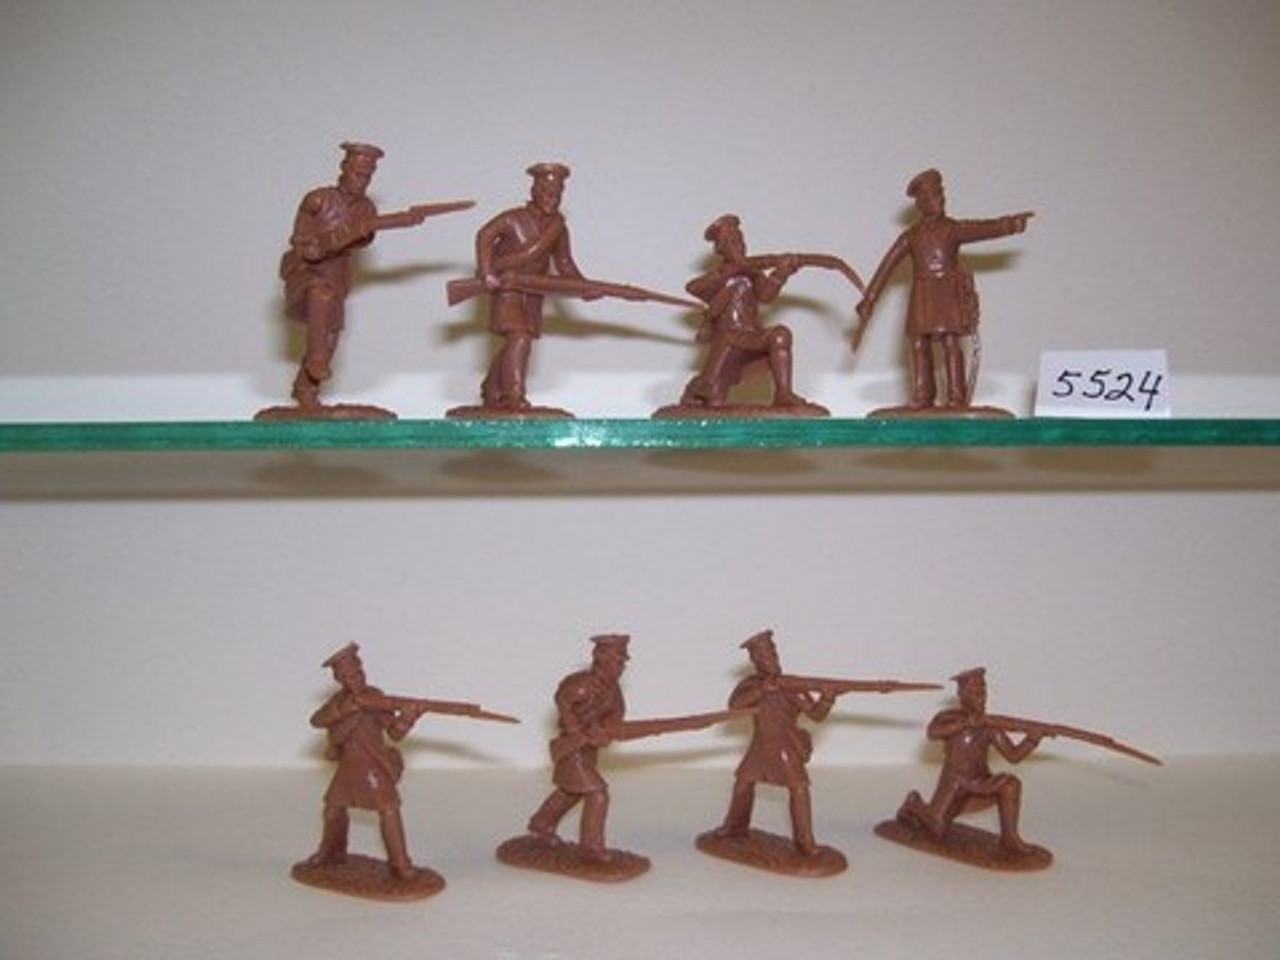 Armies In Plastic 5522 1/32 Napoleonic Wars - Prussian Landwehr (Militia) Elbe Regiment Waterloo - 1815 Toy Soldiers a